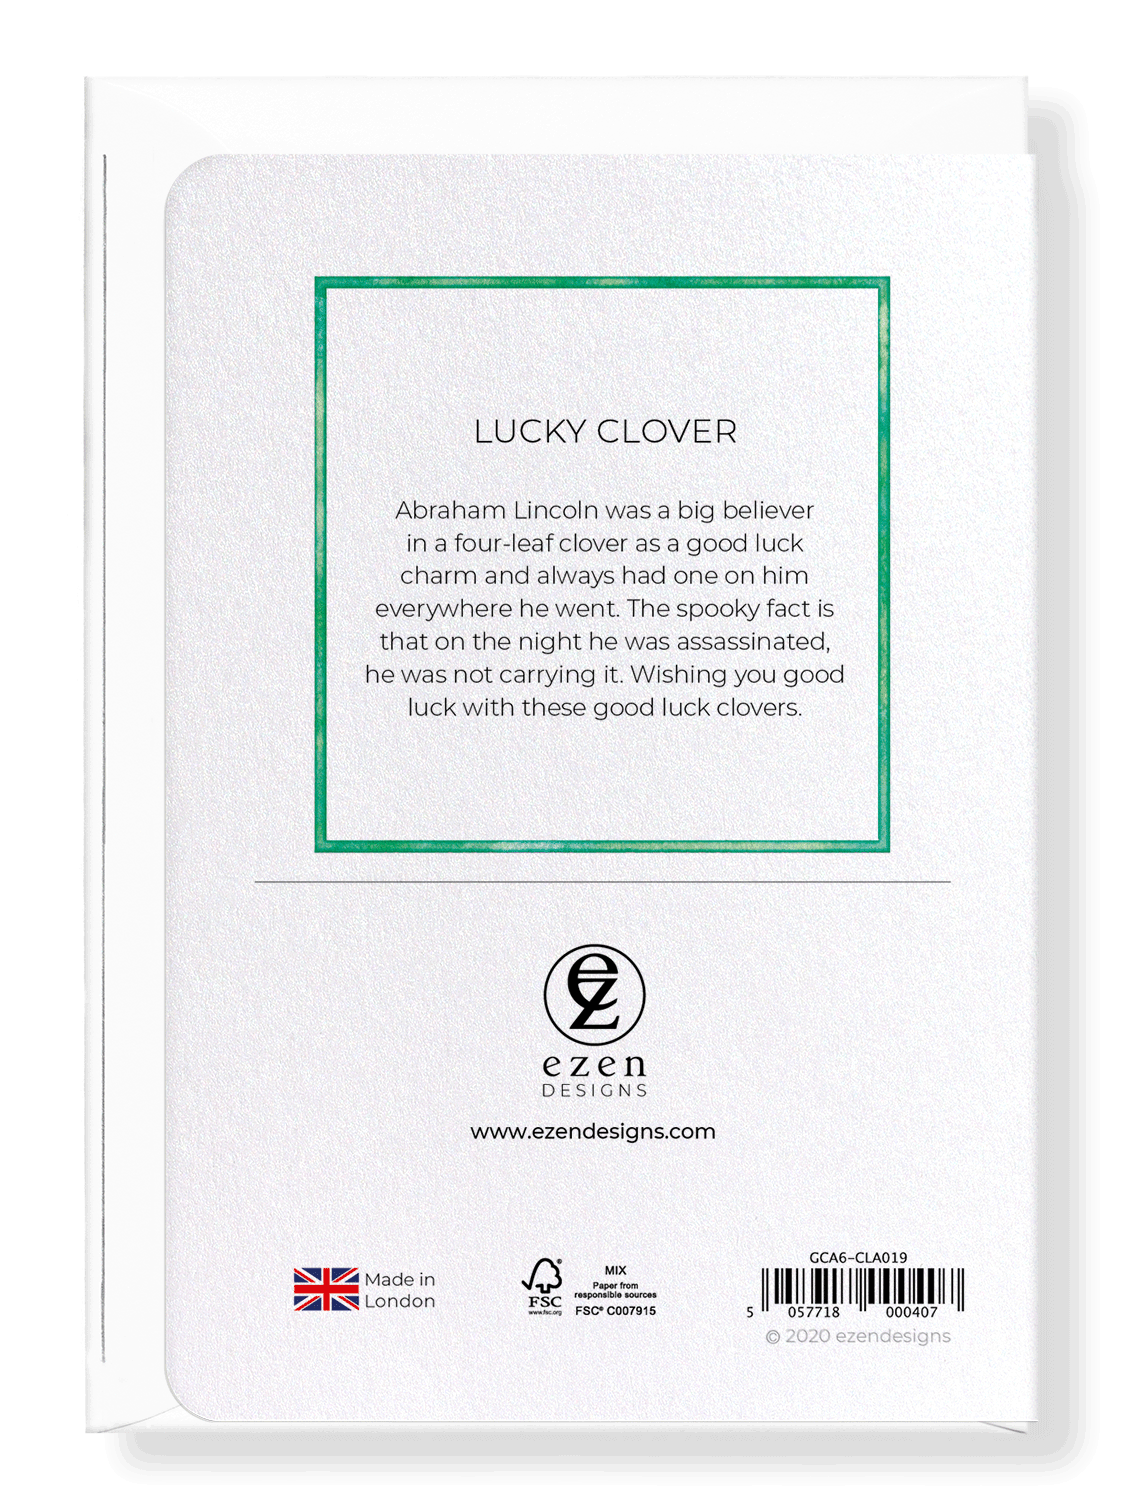 Ezen Designs - Lucky clover - Greeting Card - Back